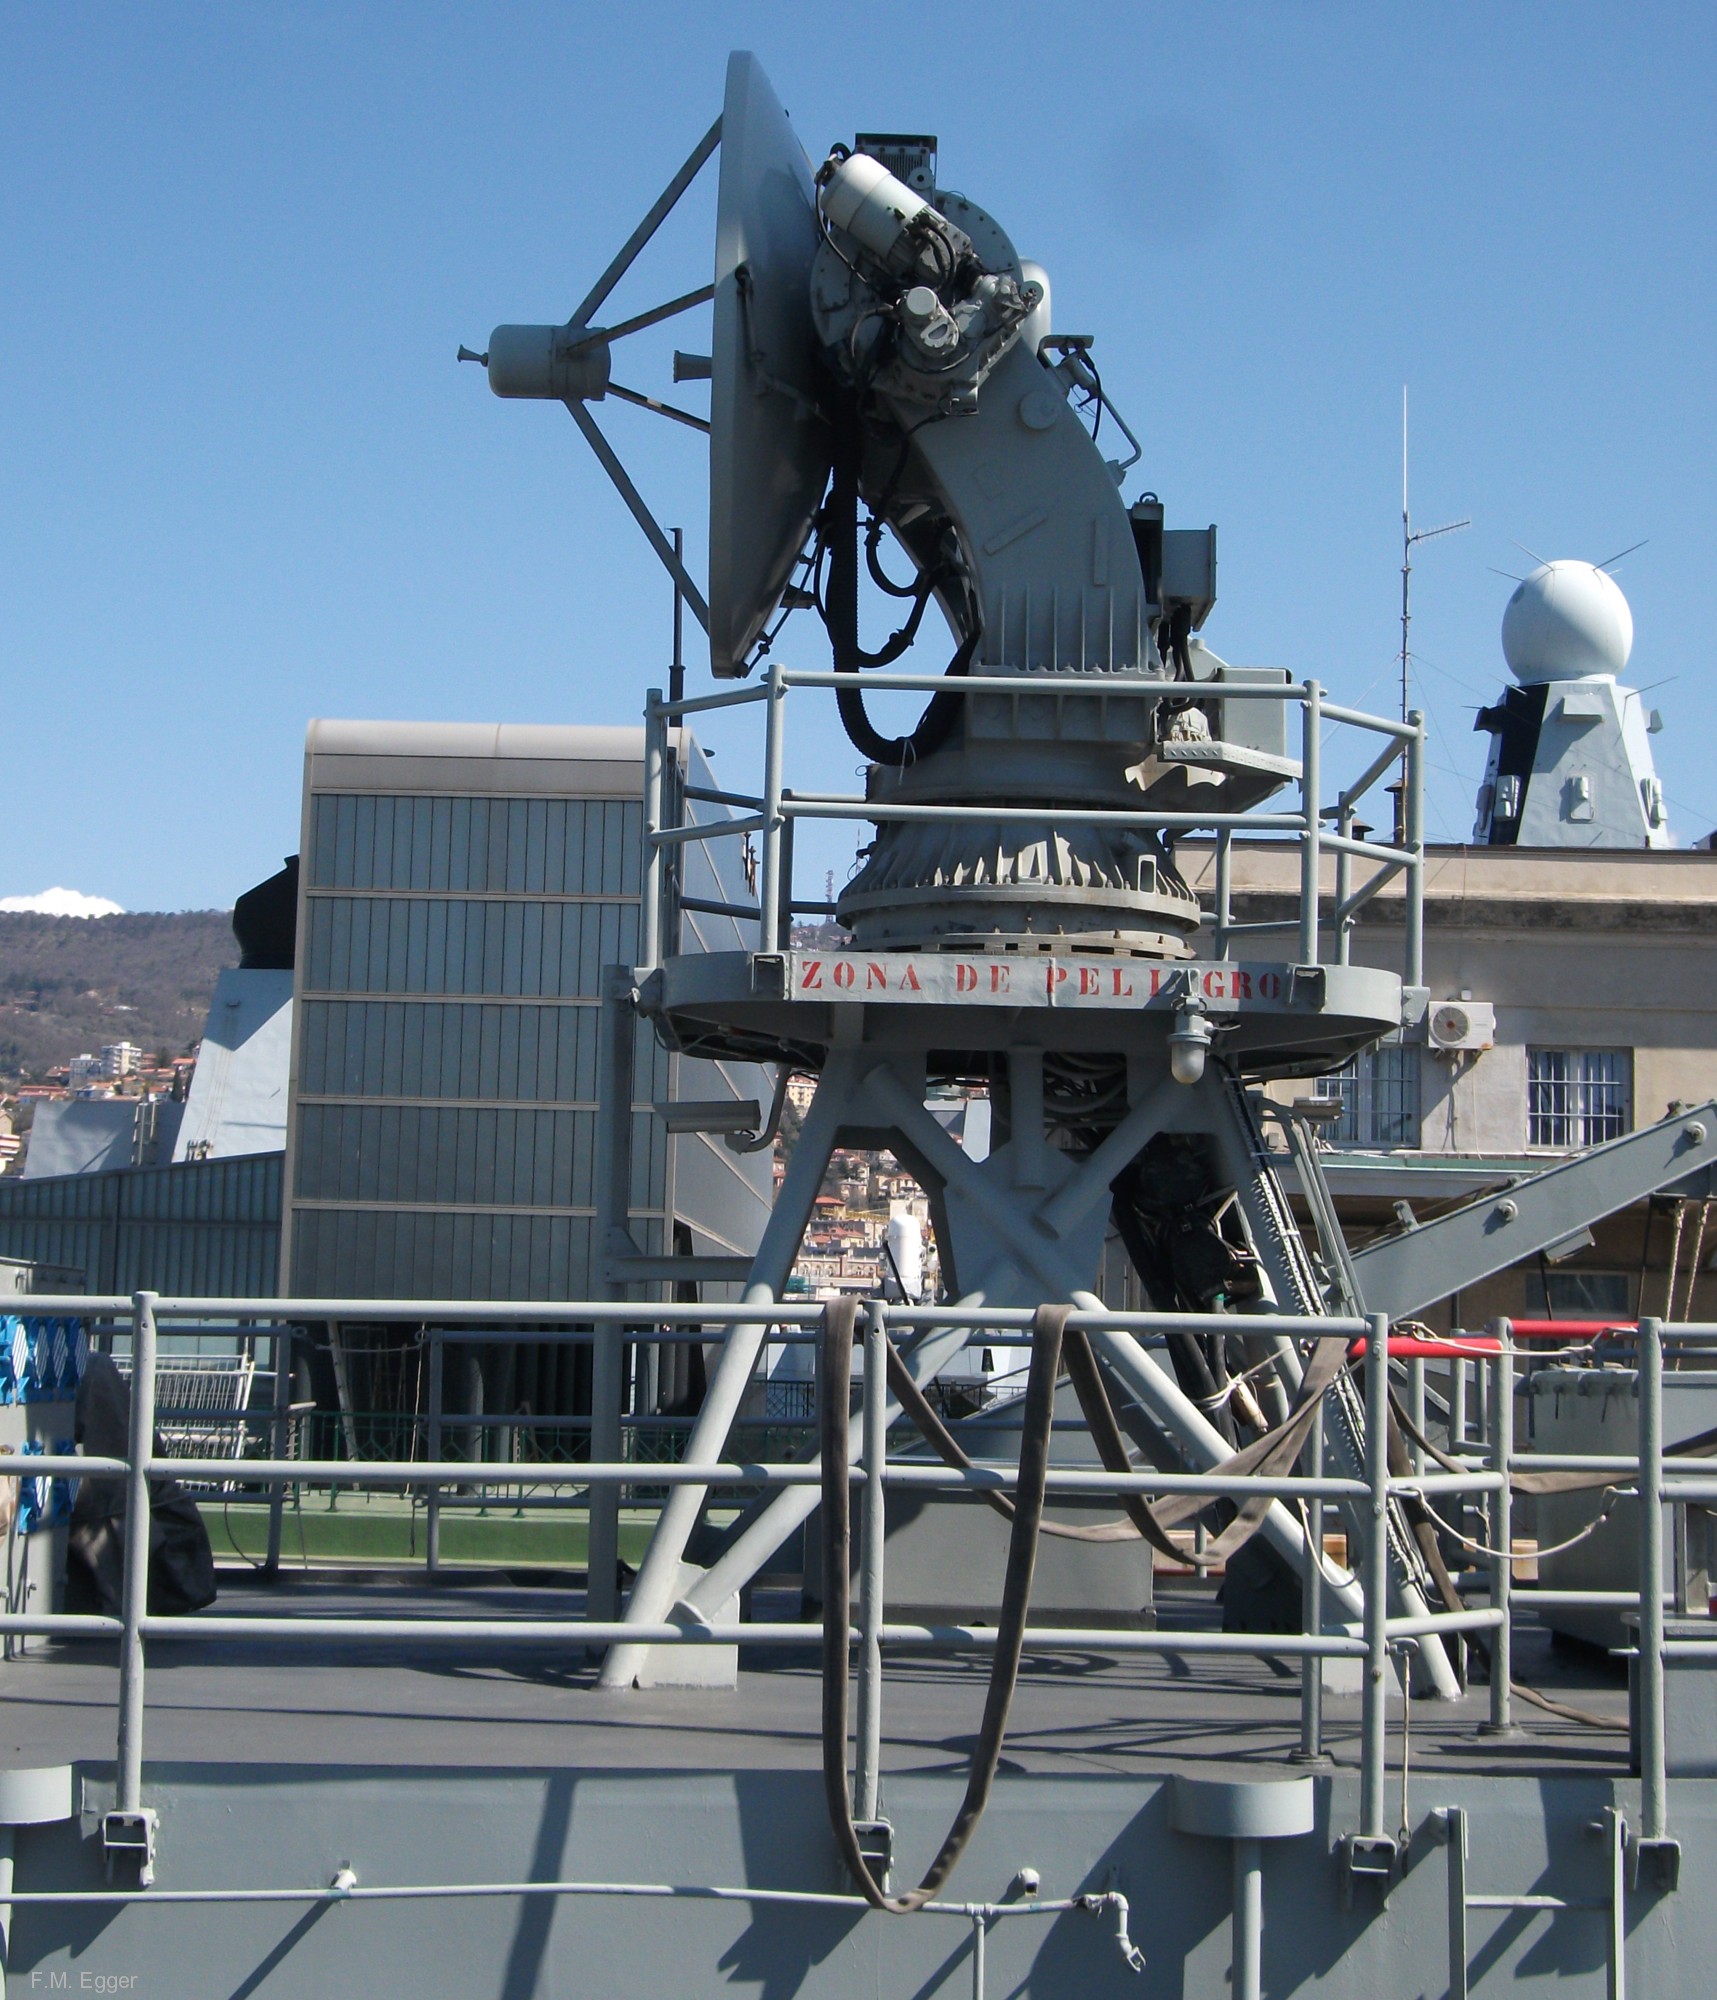 santa maria f80 class guided missile frigate spanish navy armada 21 an/spg-60 stir fire control radar